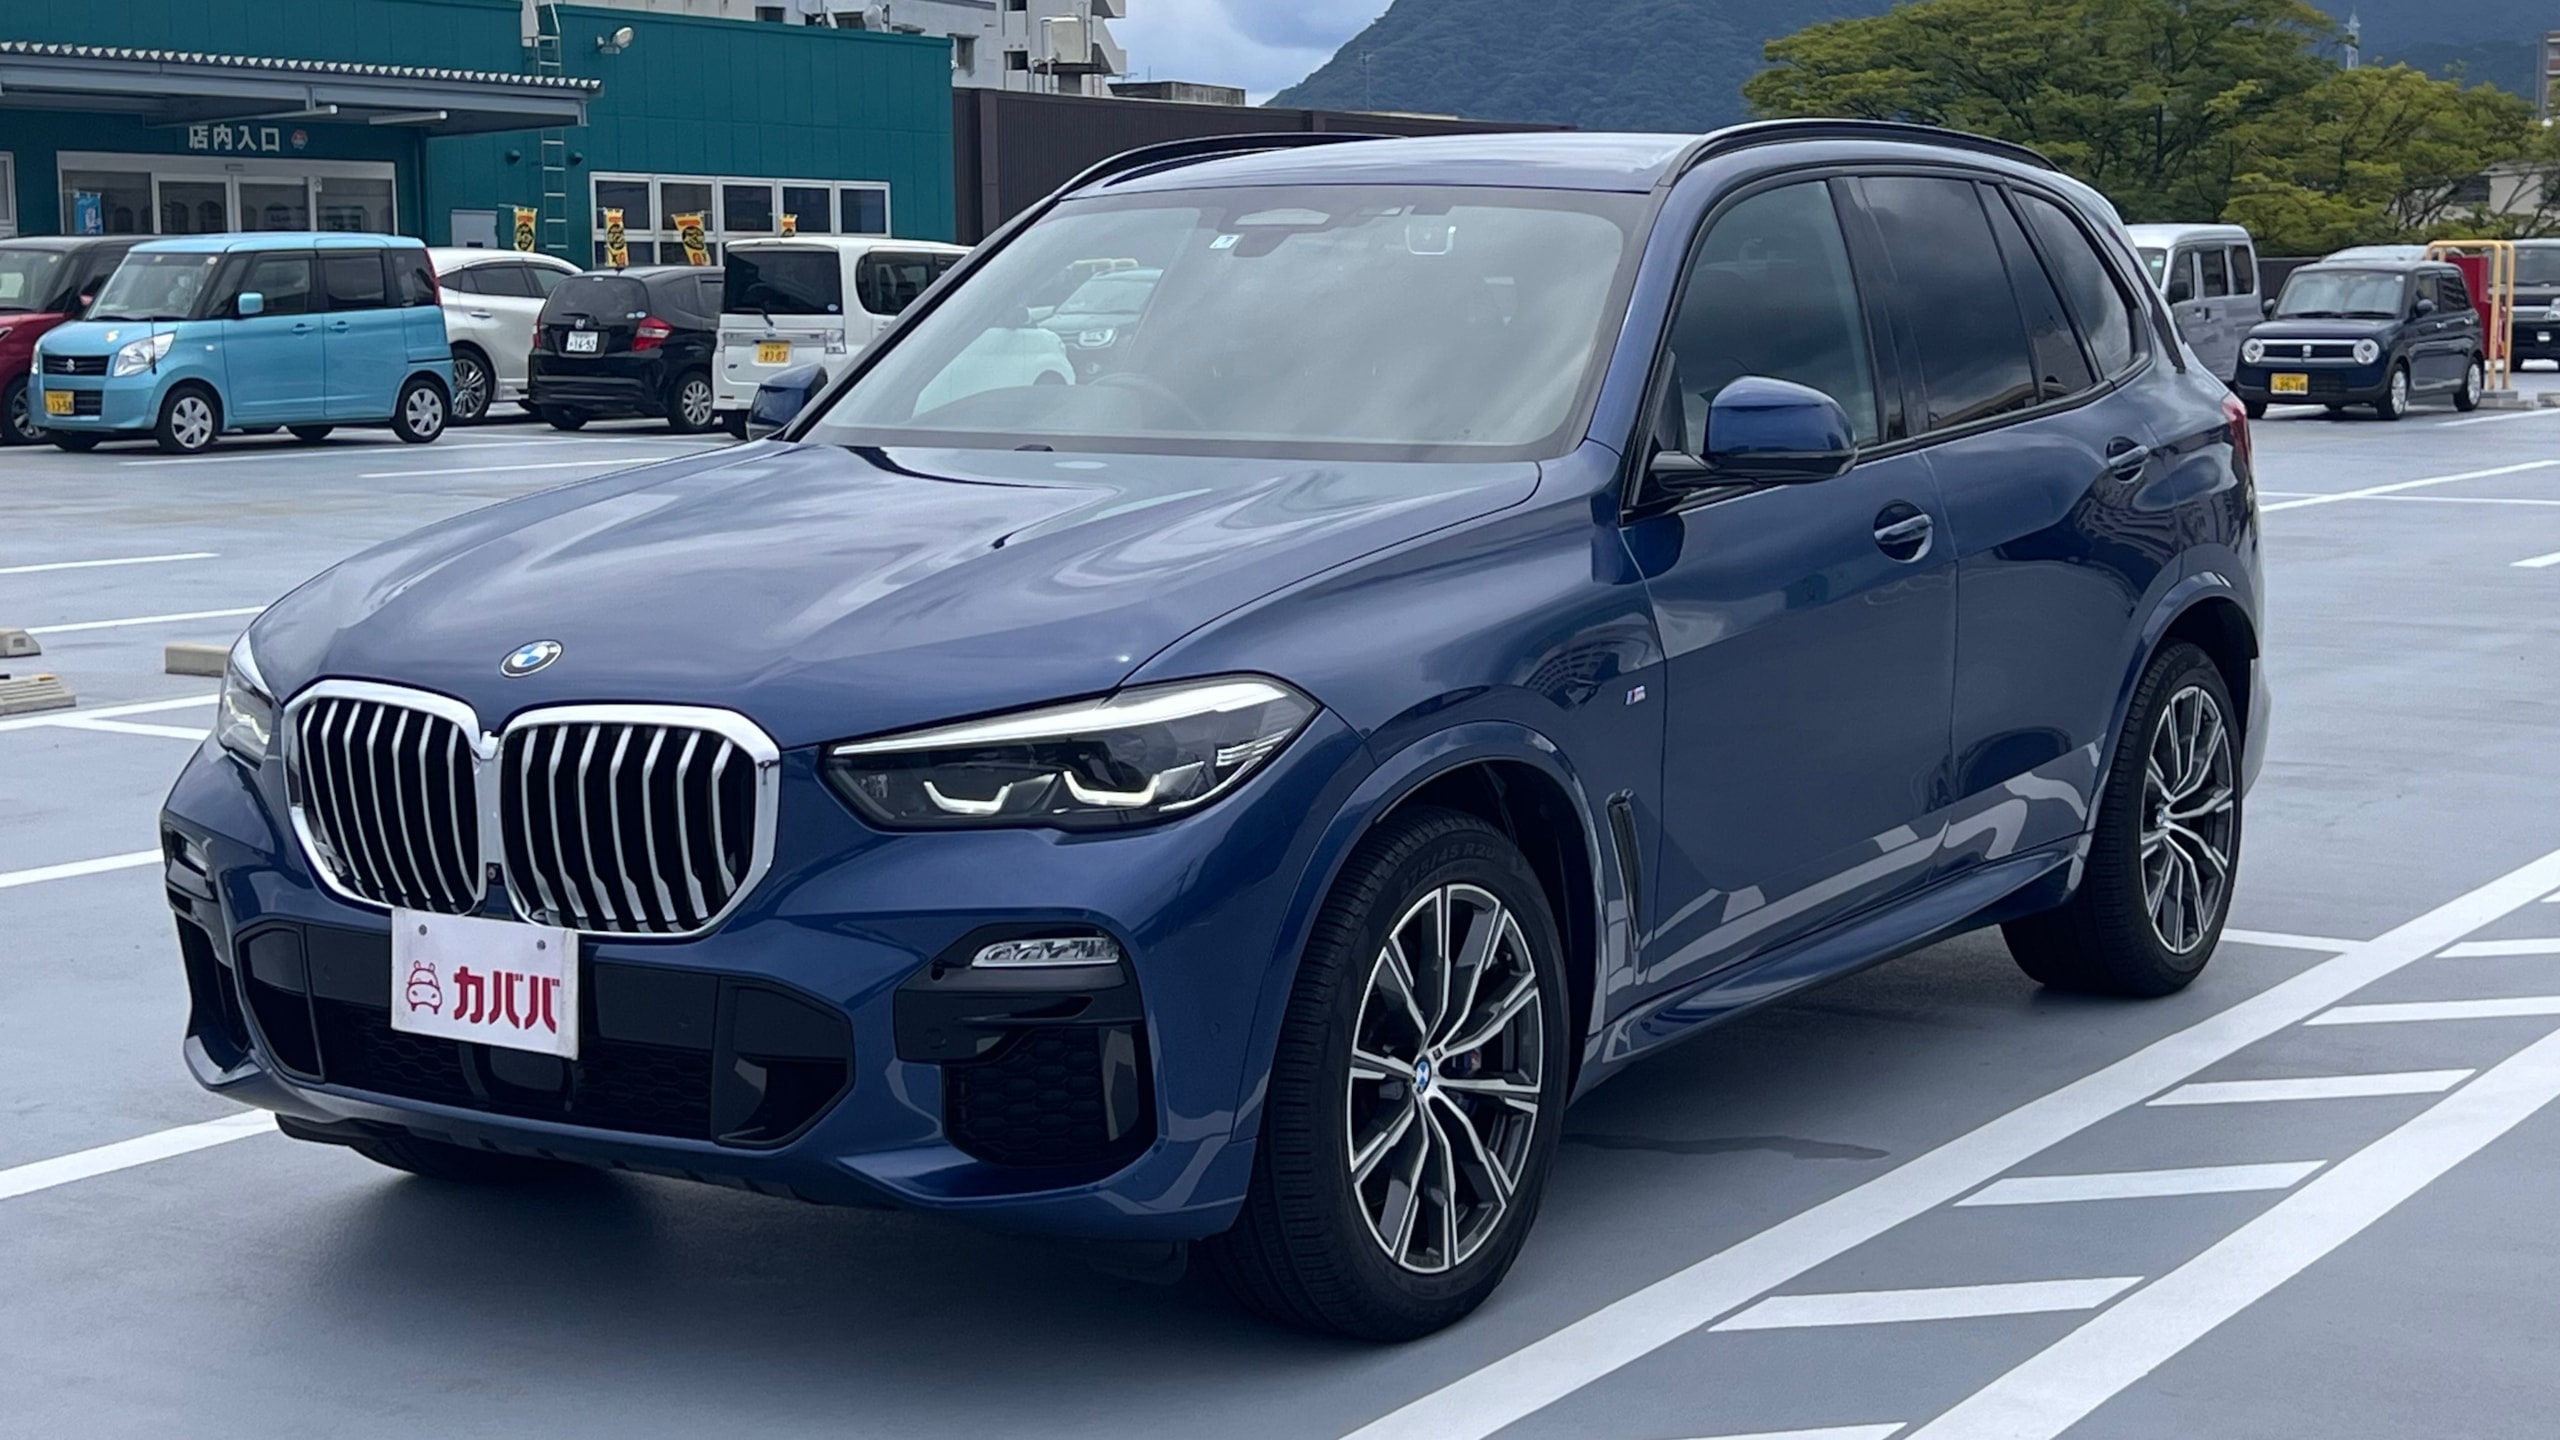 X5 xDrive 35d Mスポーツ(BMW)2019年式 580万円の中古車 - 自動車